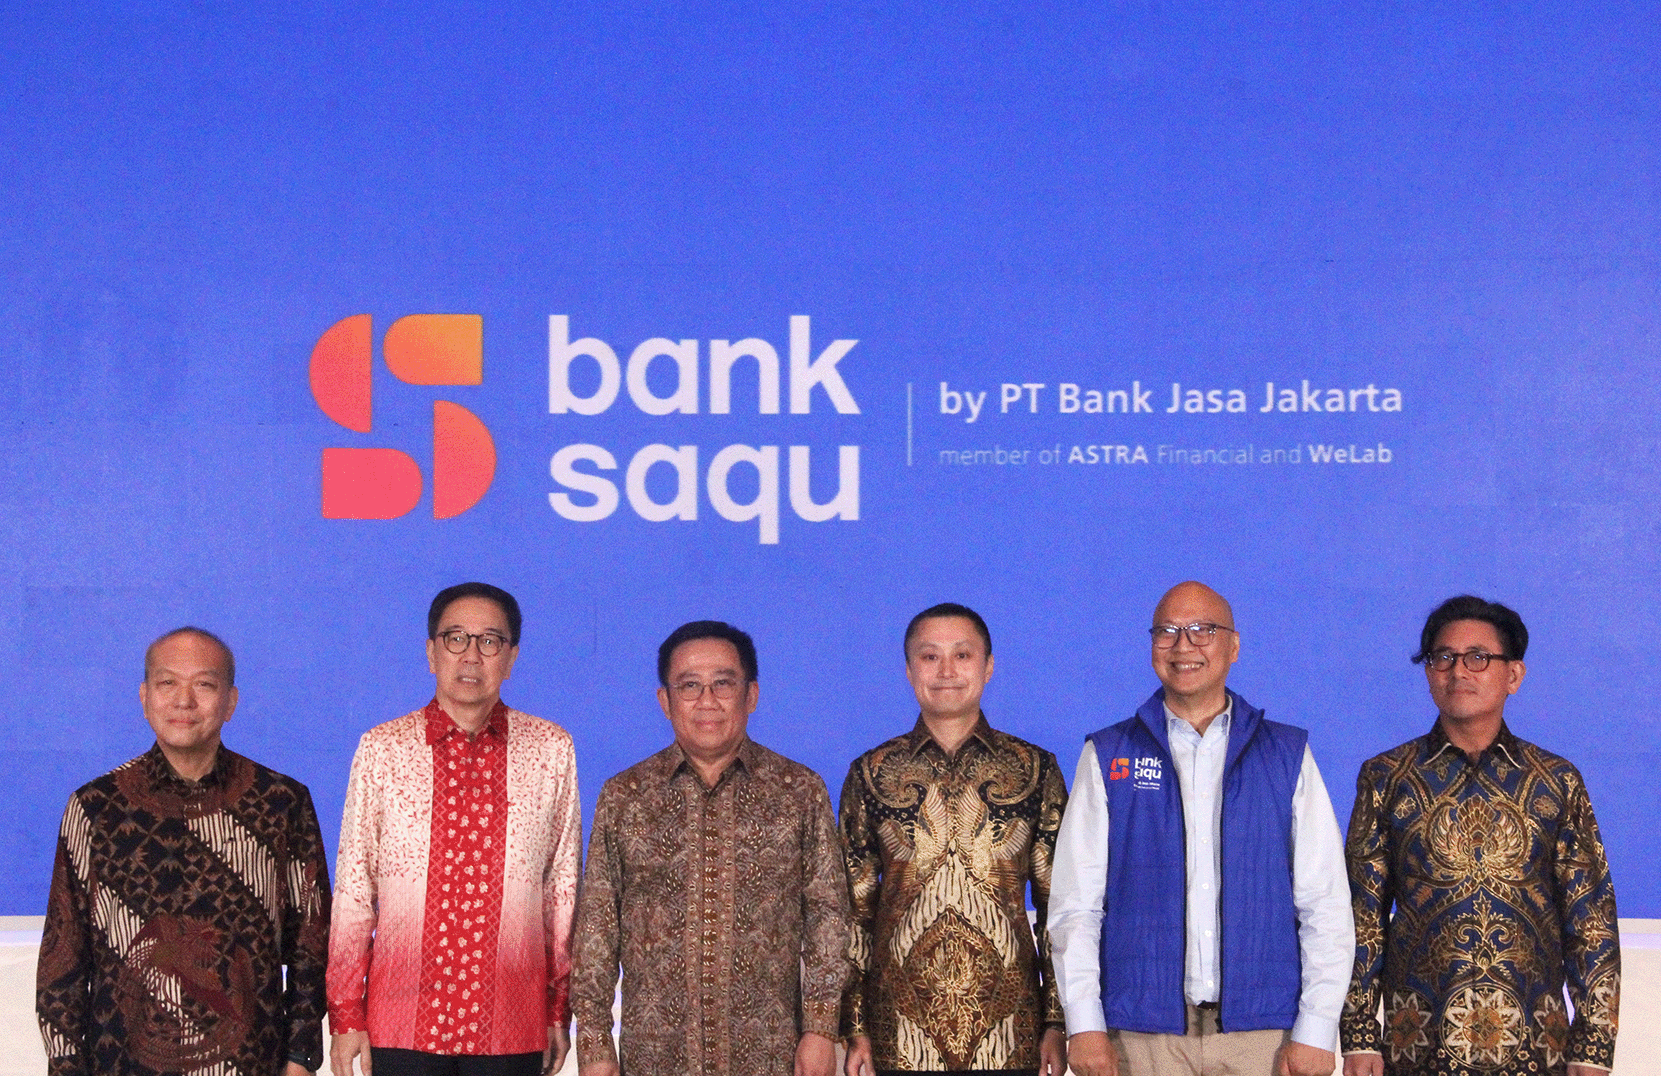 WeLab 2nd Digital Bank - Bank Saqu Launched